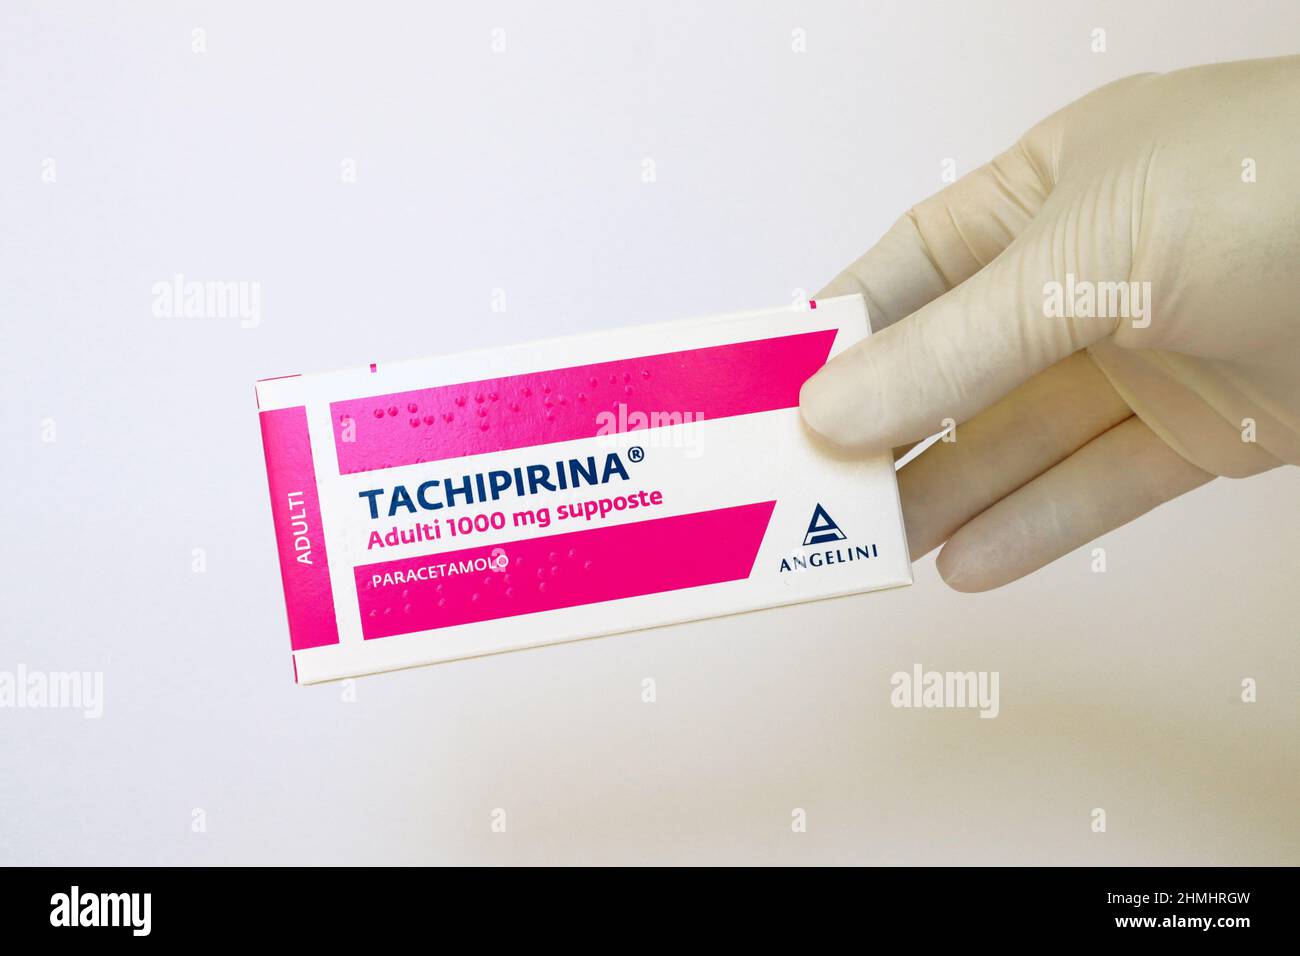 TACHIPIRINA 1000 mg suppositories. Tachipirina contains paracetamol,  medication used to treat fever and pain. Manufactured by Angelini Pharma,  Italy Stock Photo - Alamy